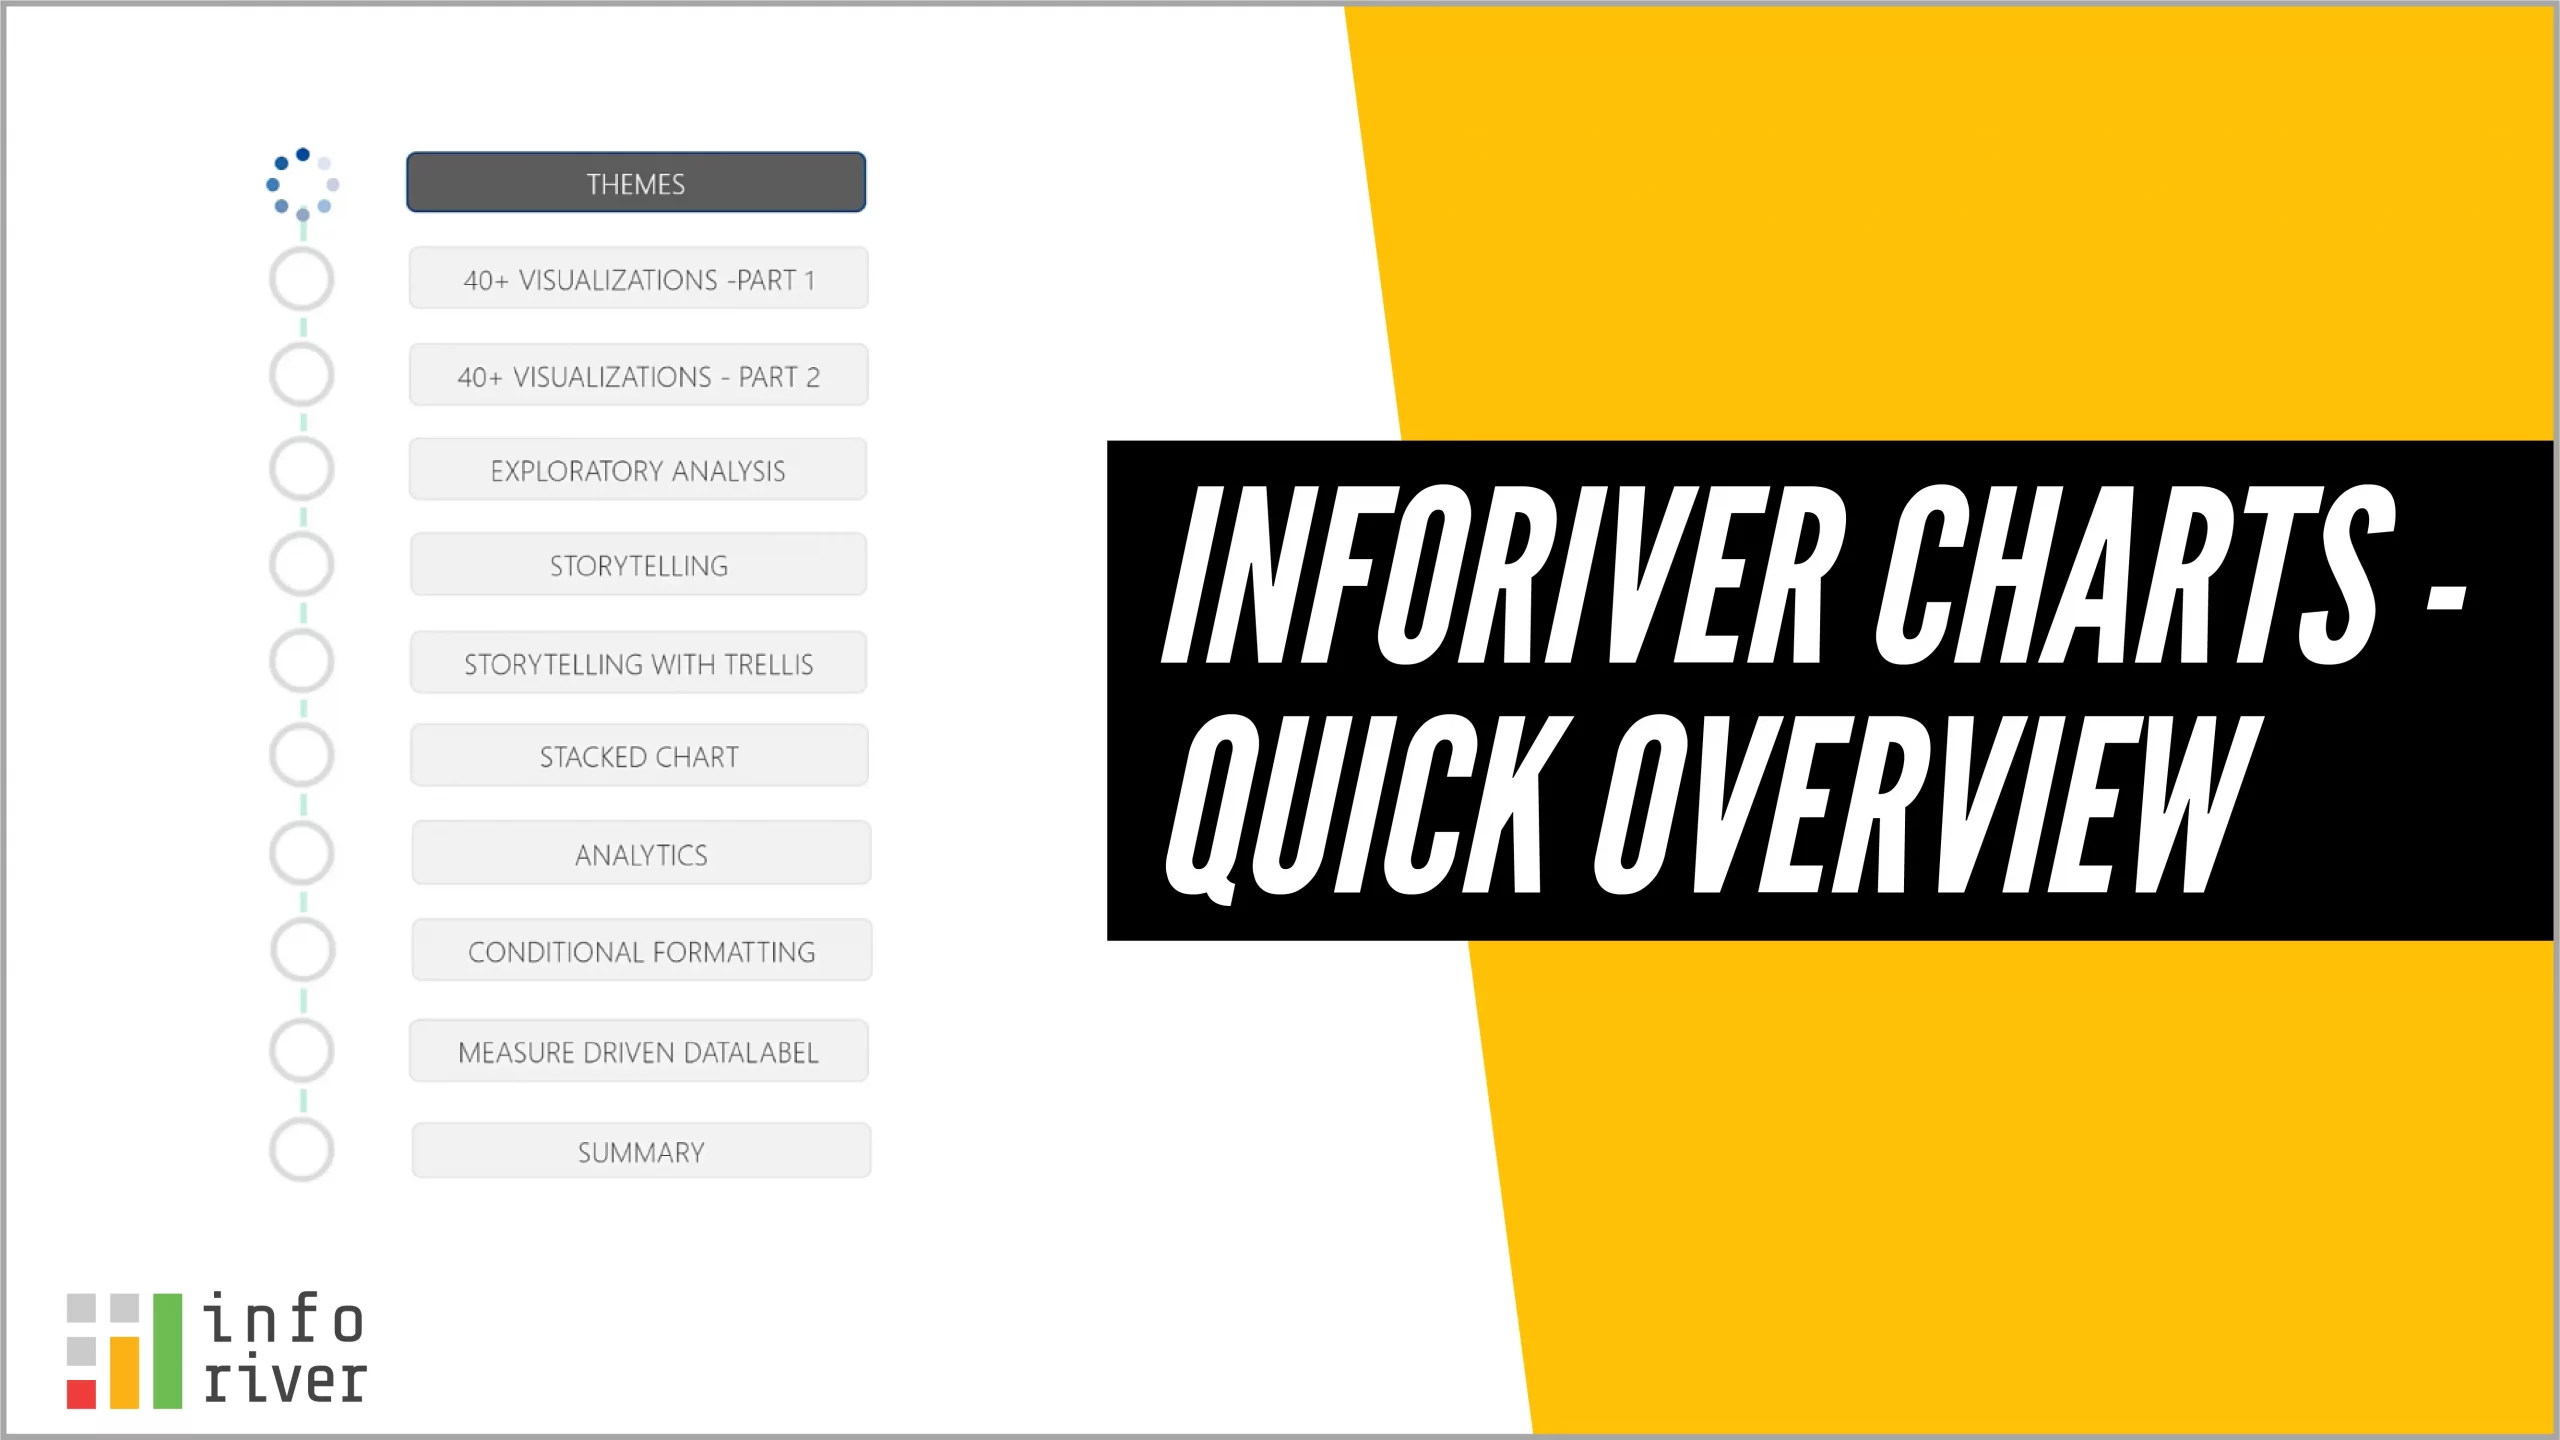 Inforiver Charts featured in Microsoft Power BI Blog